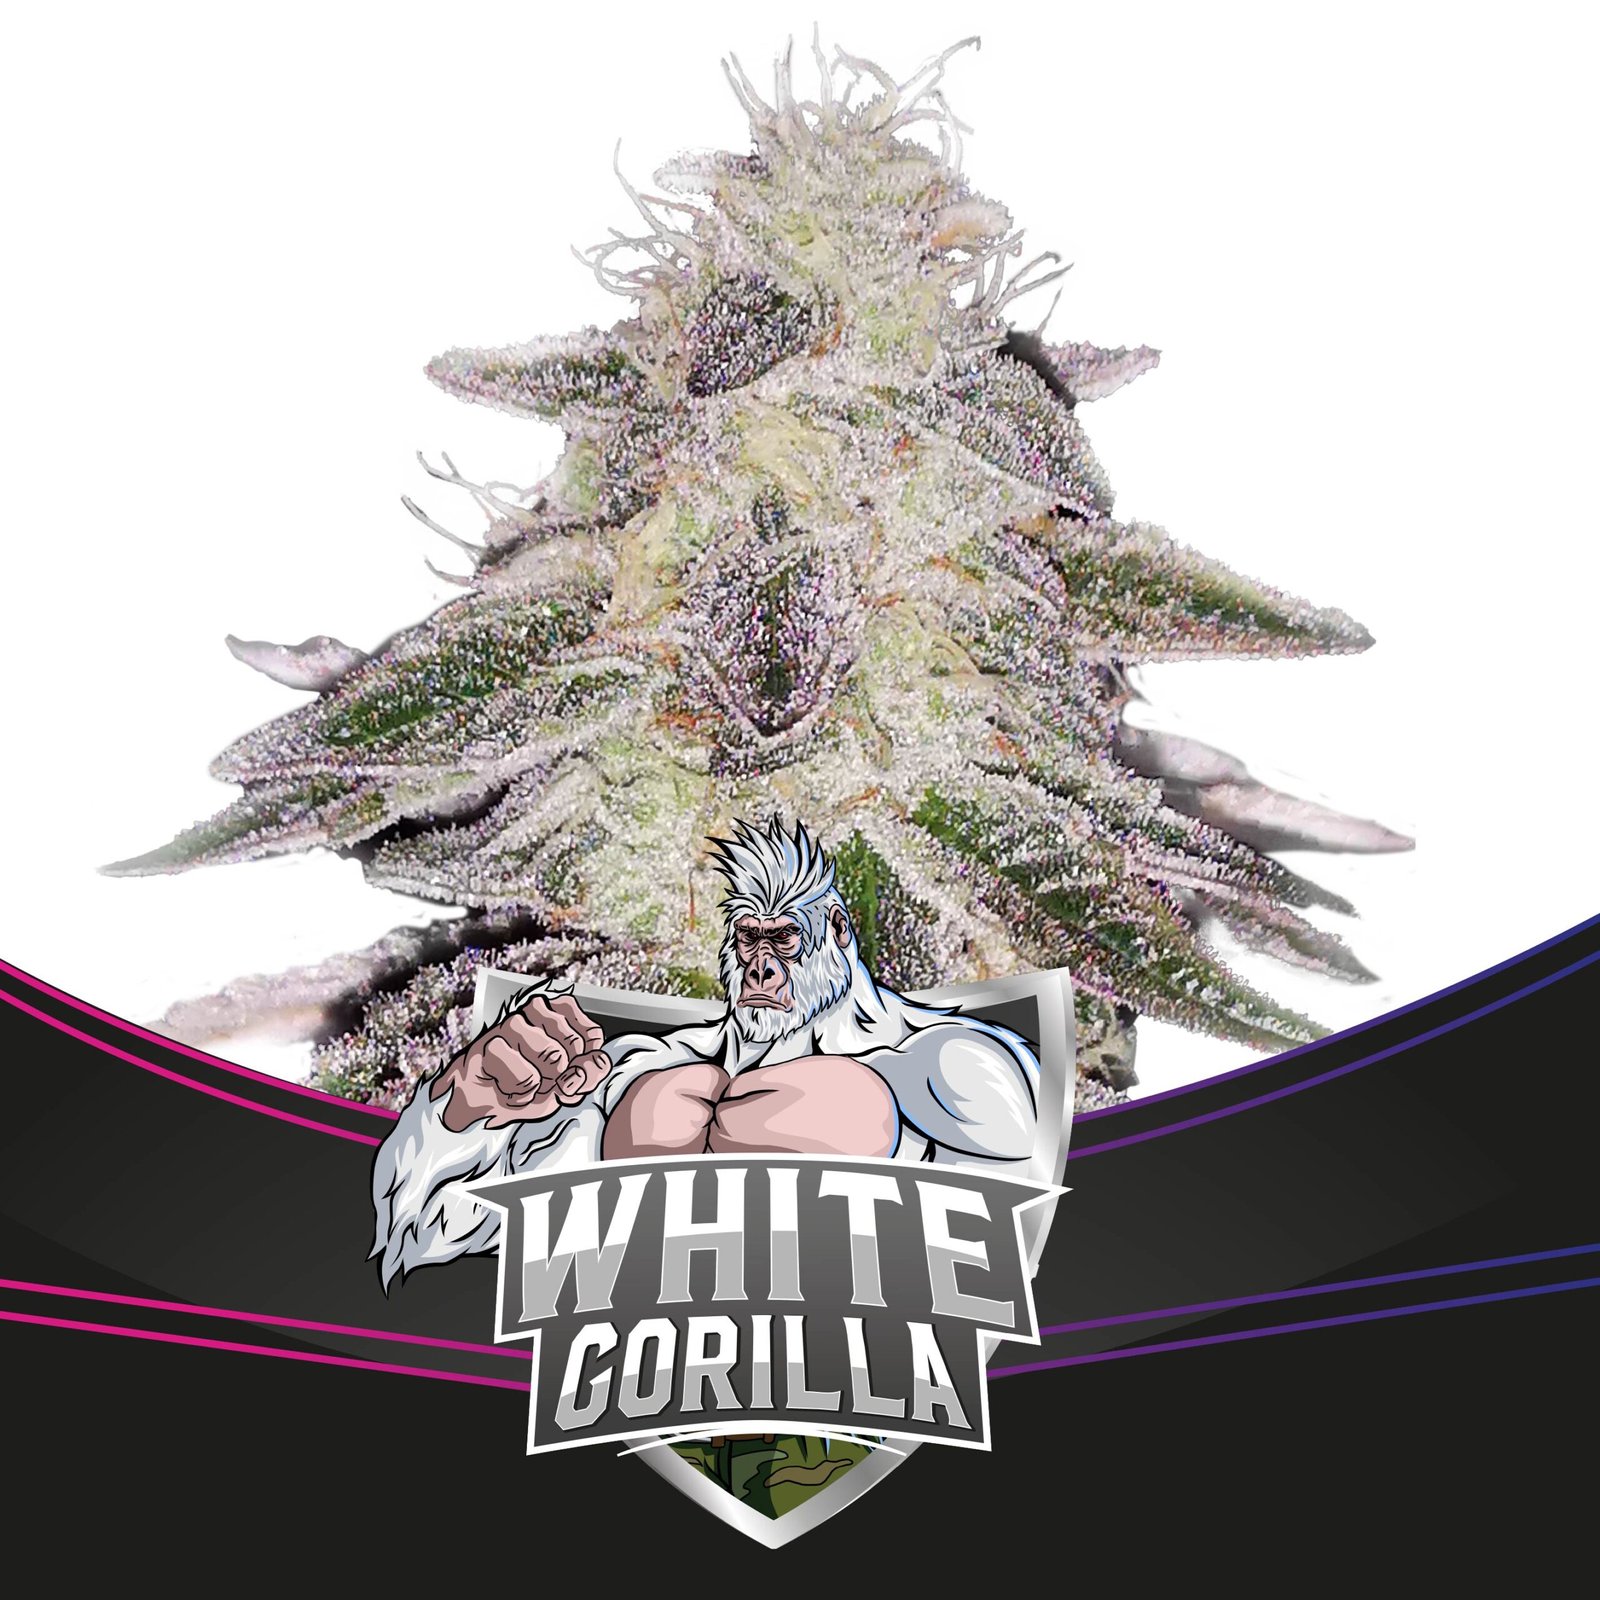 White Gorilla BSF SEEDS